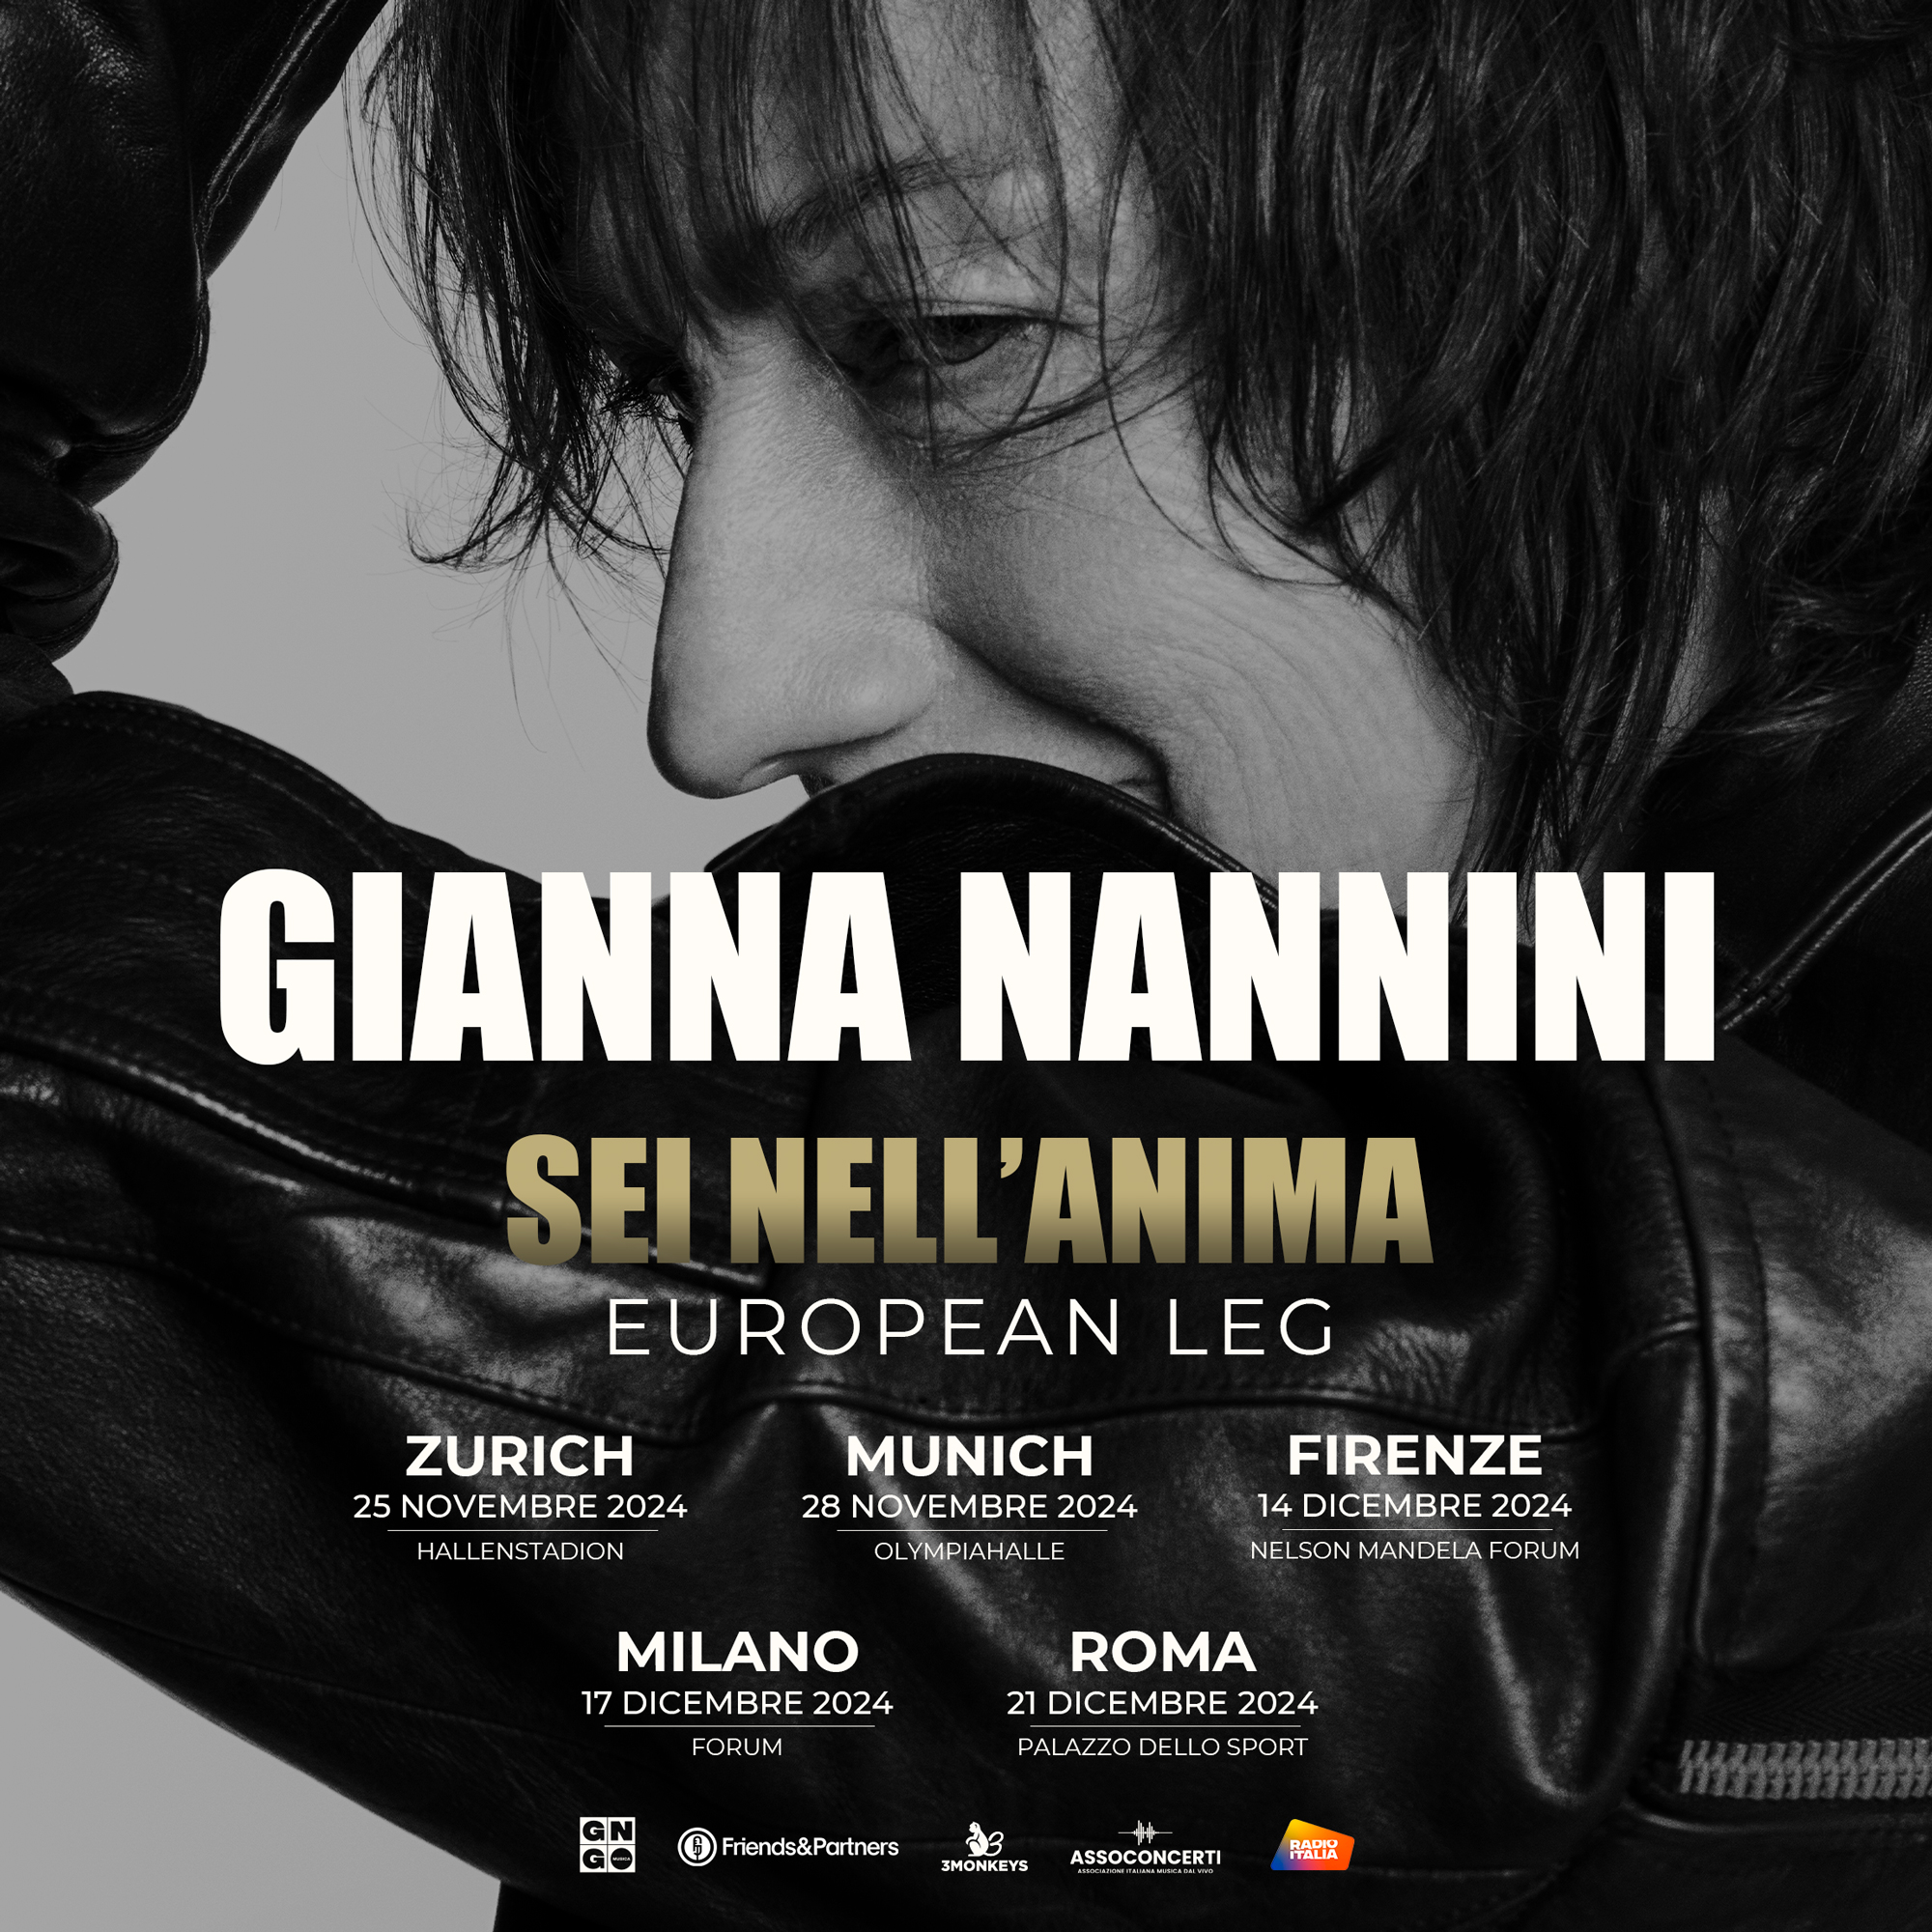 Gianna Nannini - Sei Nell'anima al Jahrhunderthalle Tickets